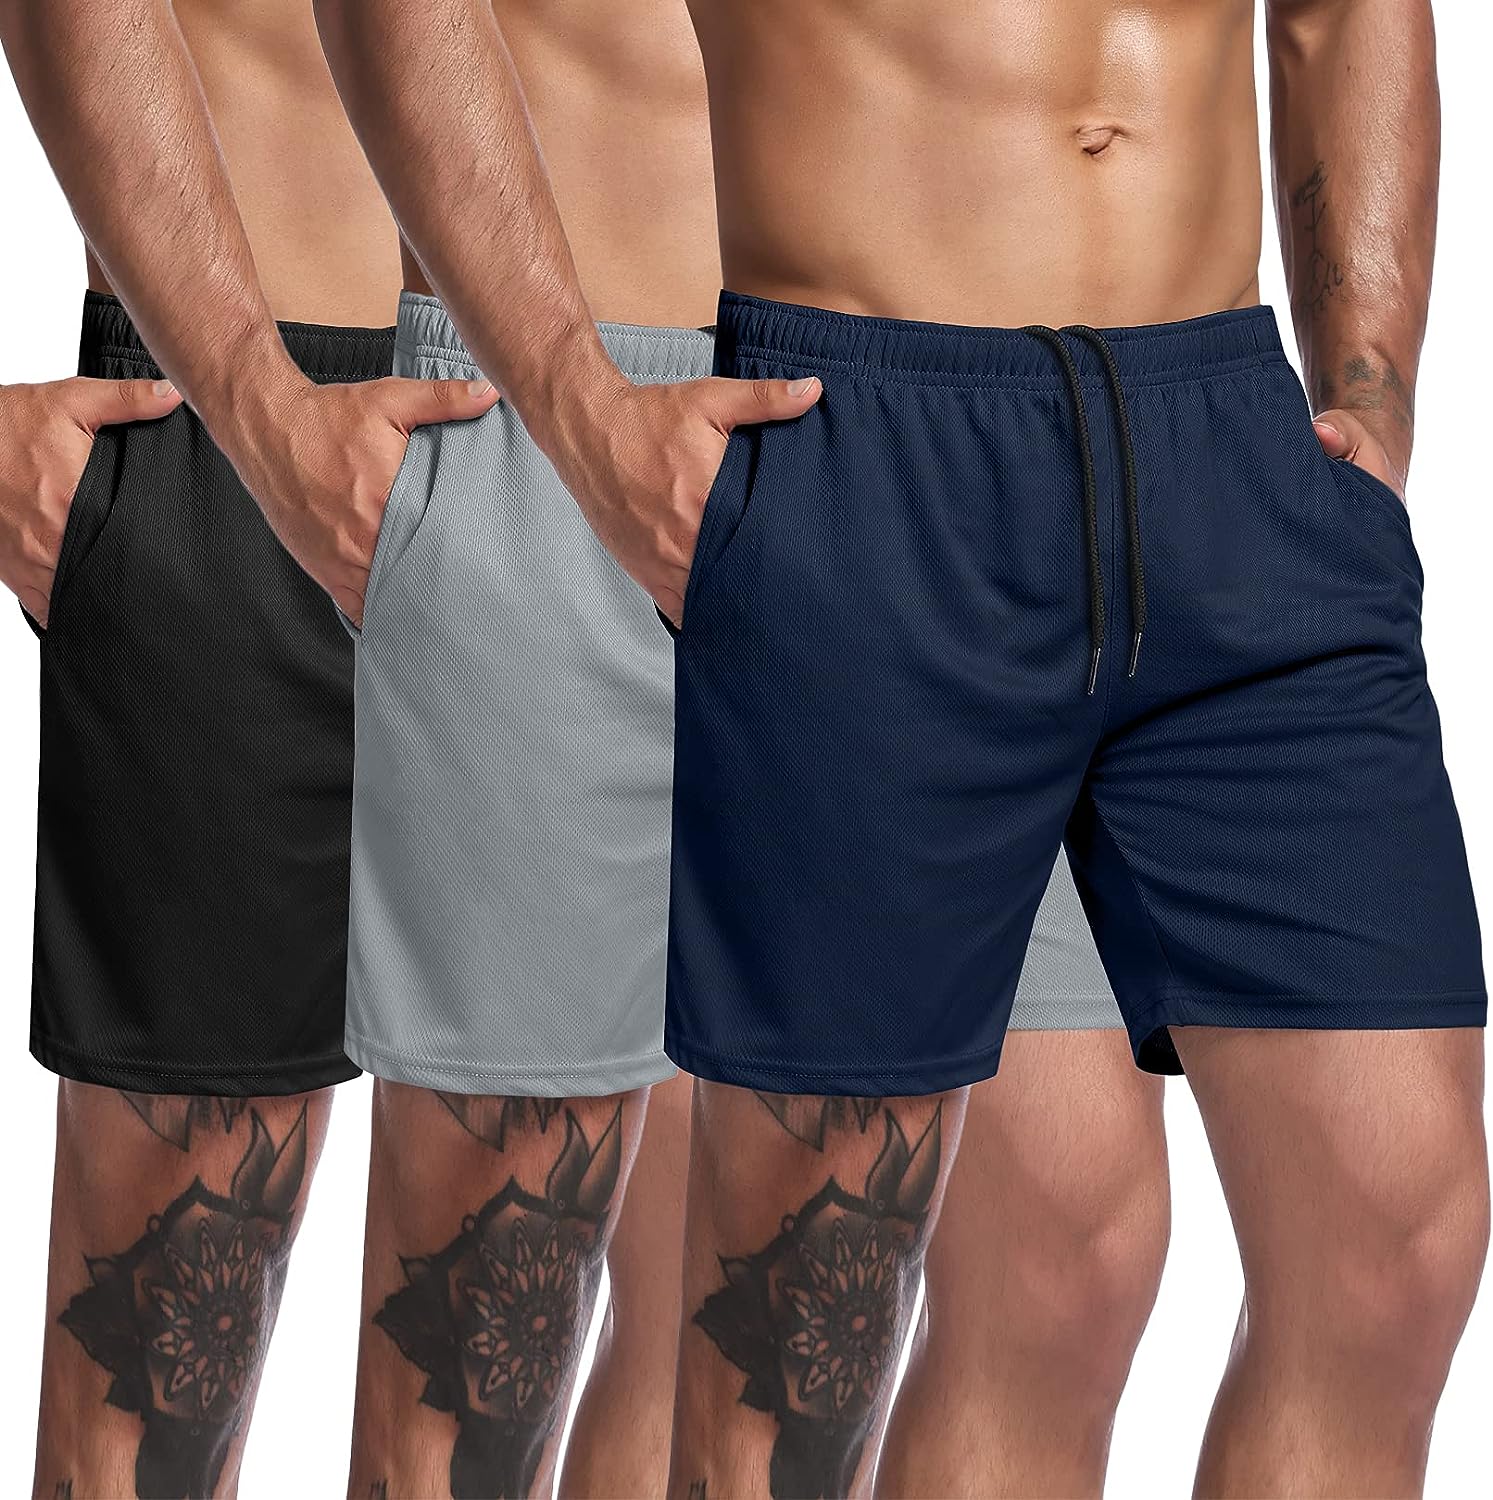 Mesh Shorts Men WholeSale - Price List, Bulk Buy at